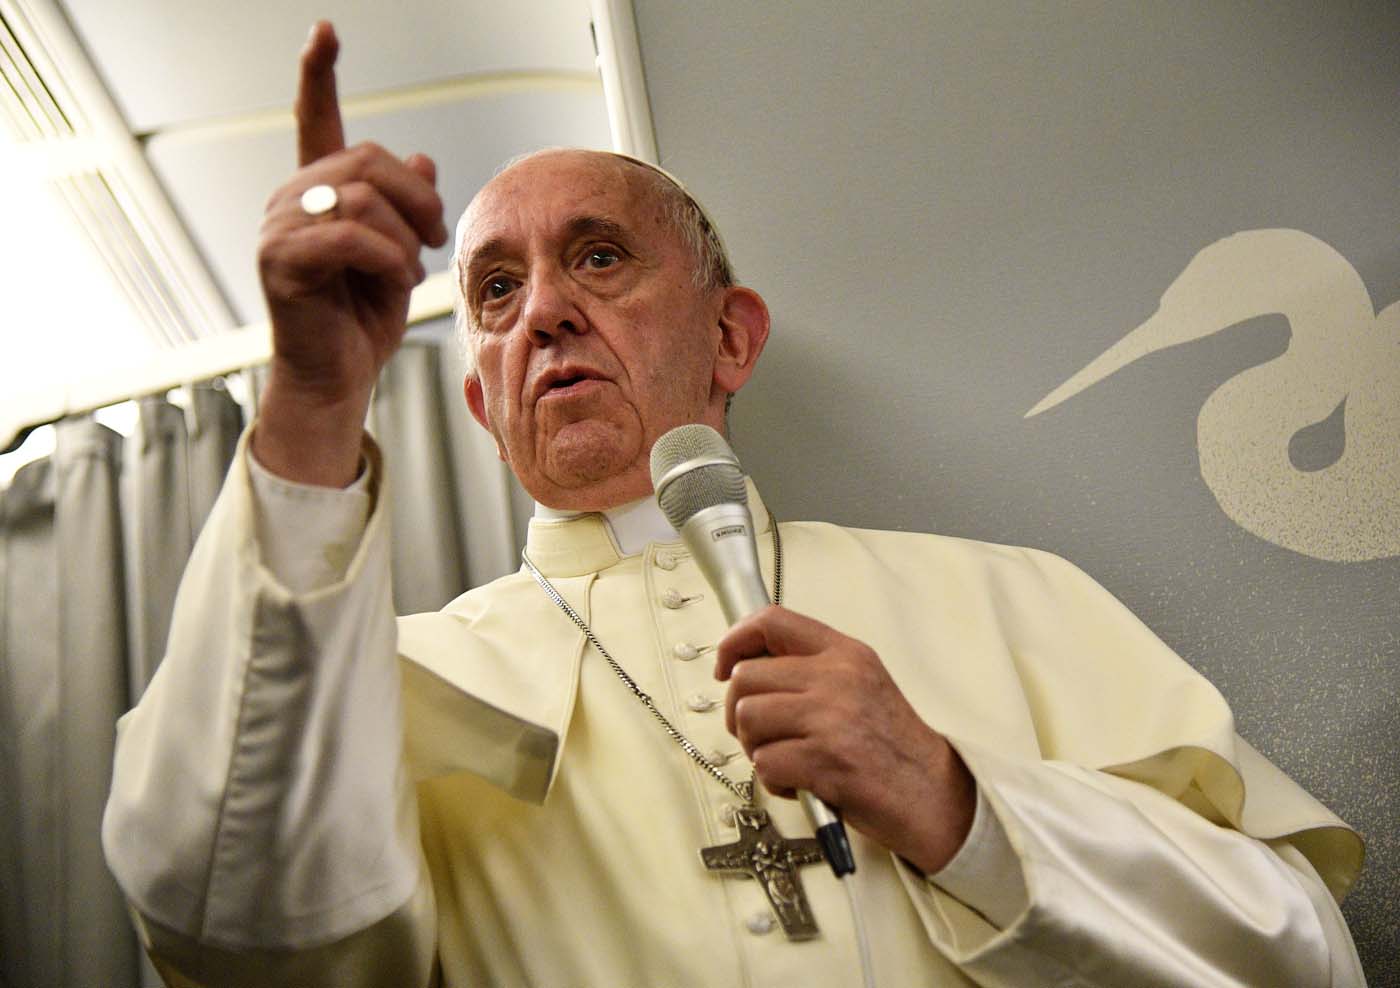 Vaticano confirma que el papa Francisco ordenó investigación sobre iglesia de Honduras